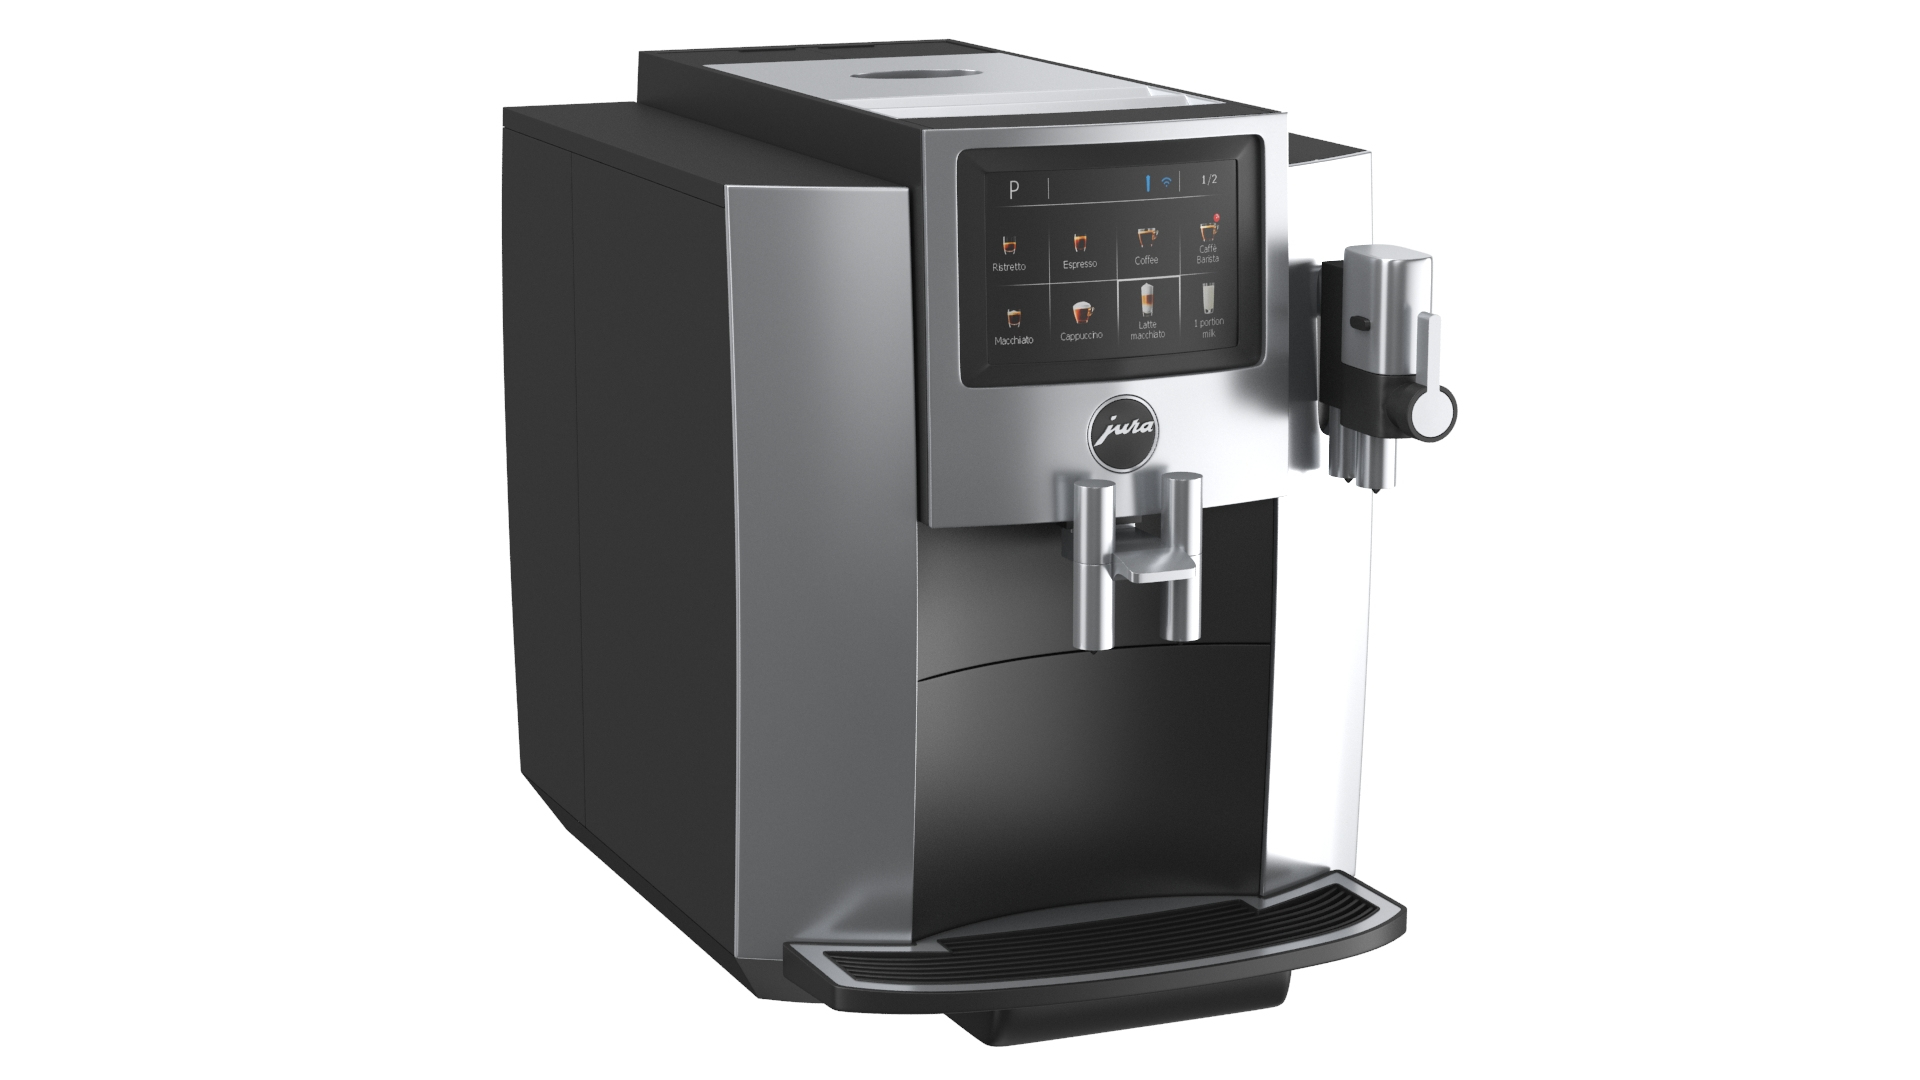 3D commercial coffee pot warmer model - TurboSquid 1538248